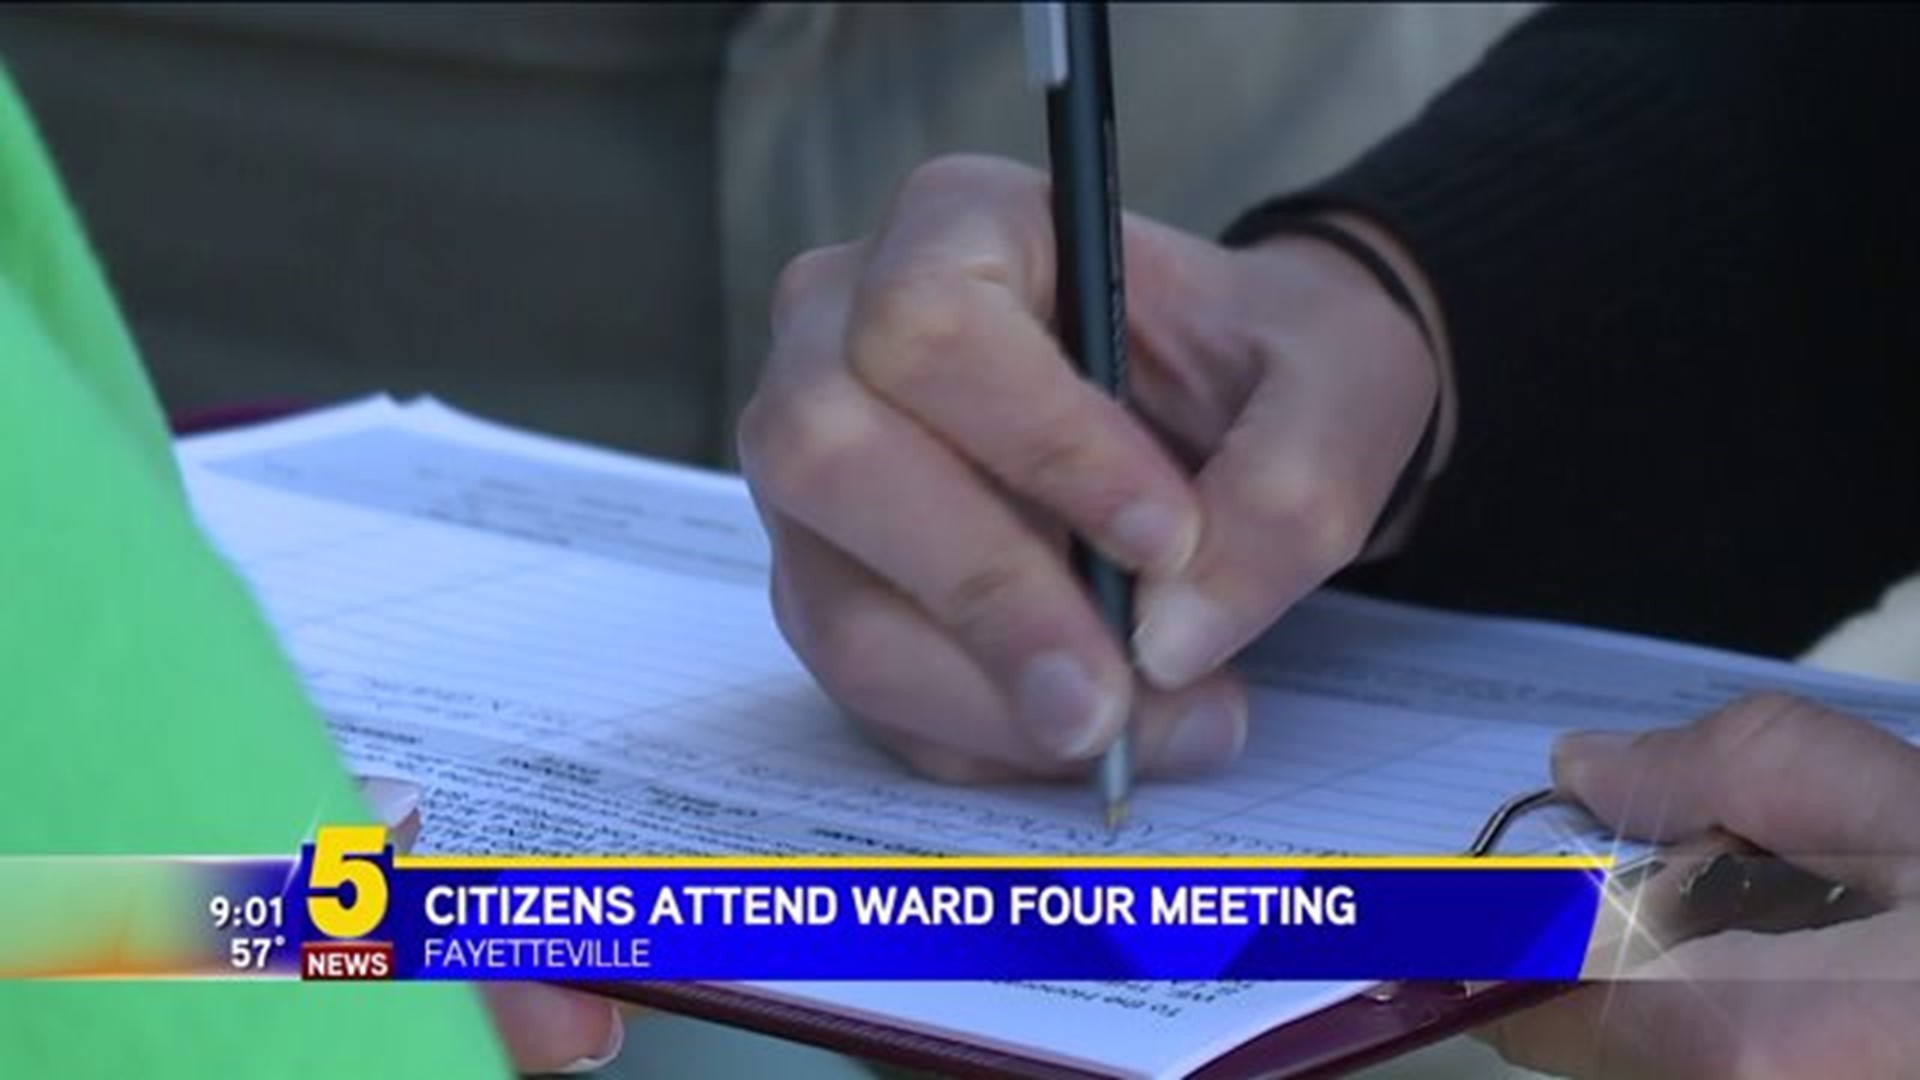 Ward Four Meeting